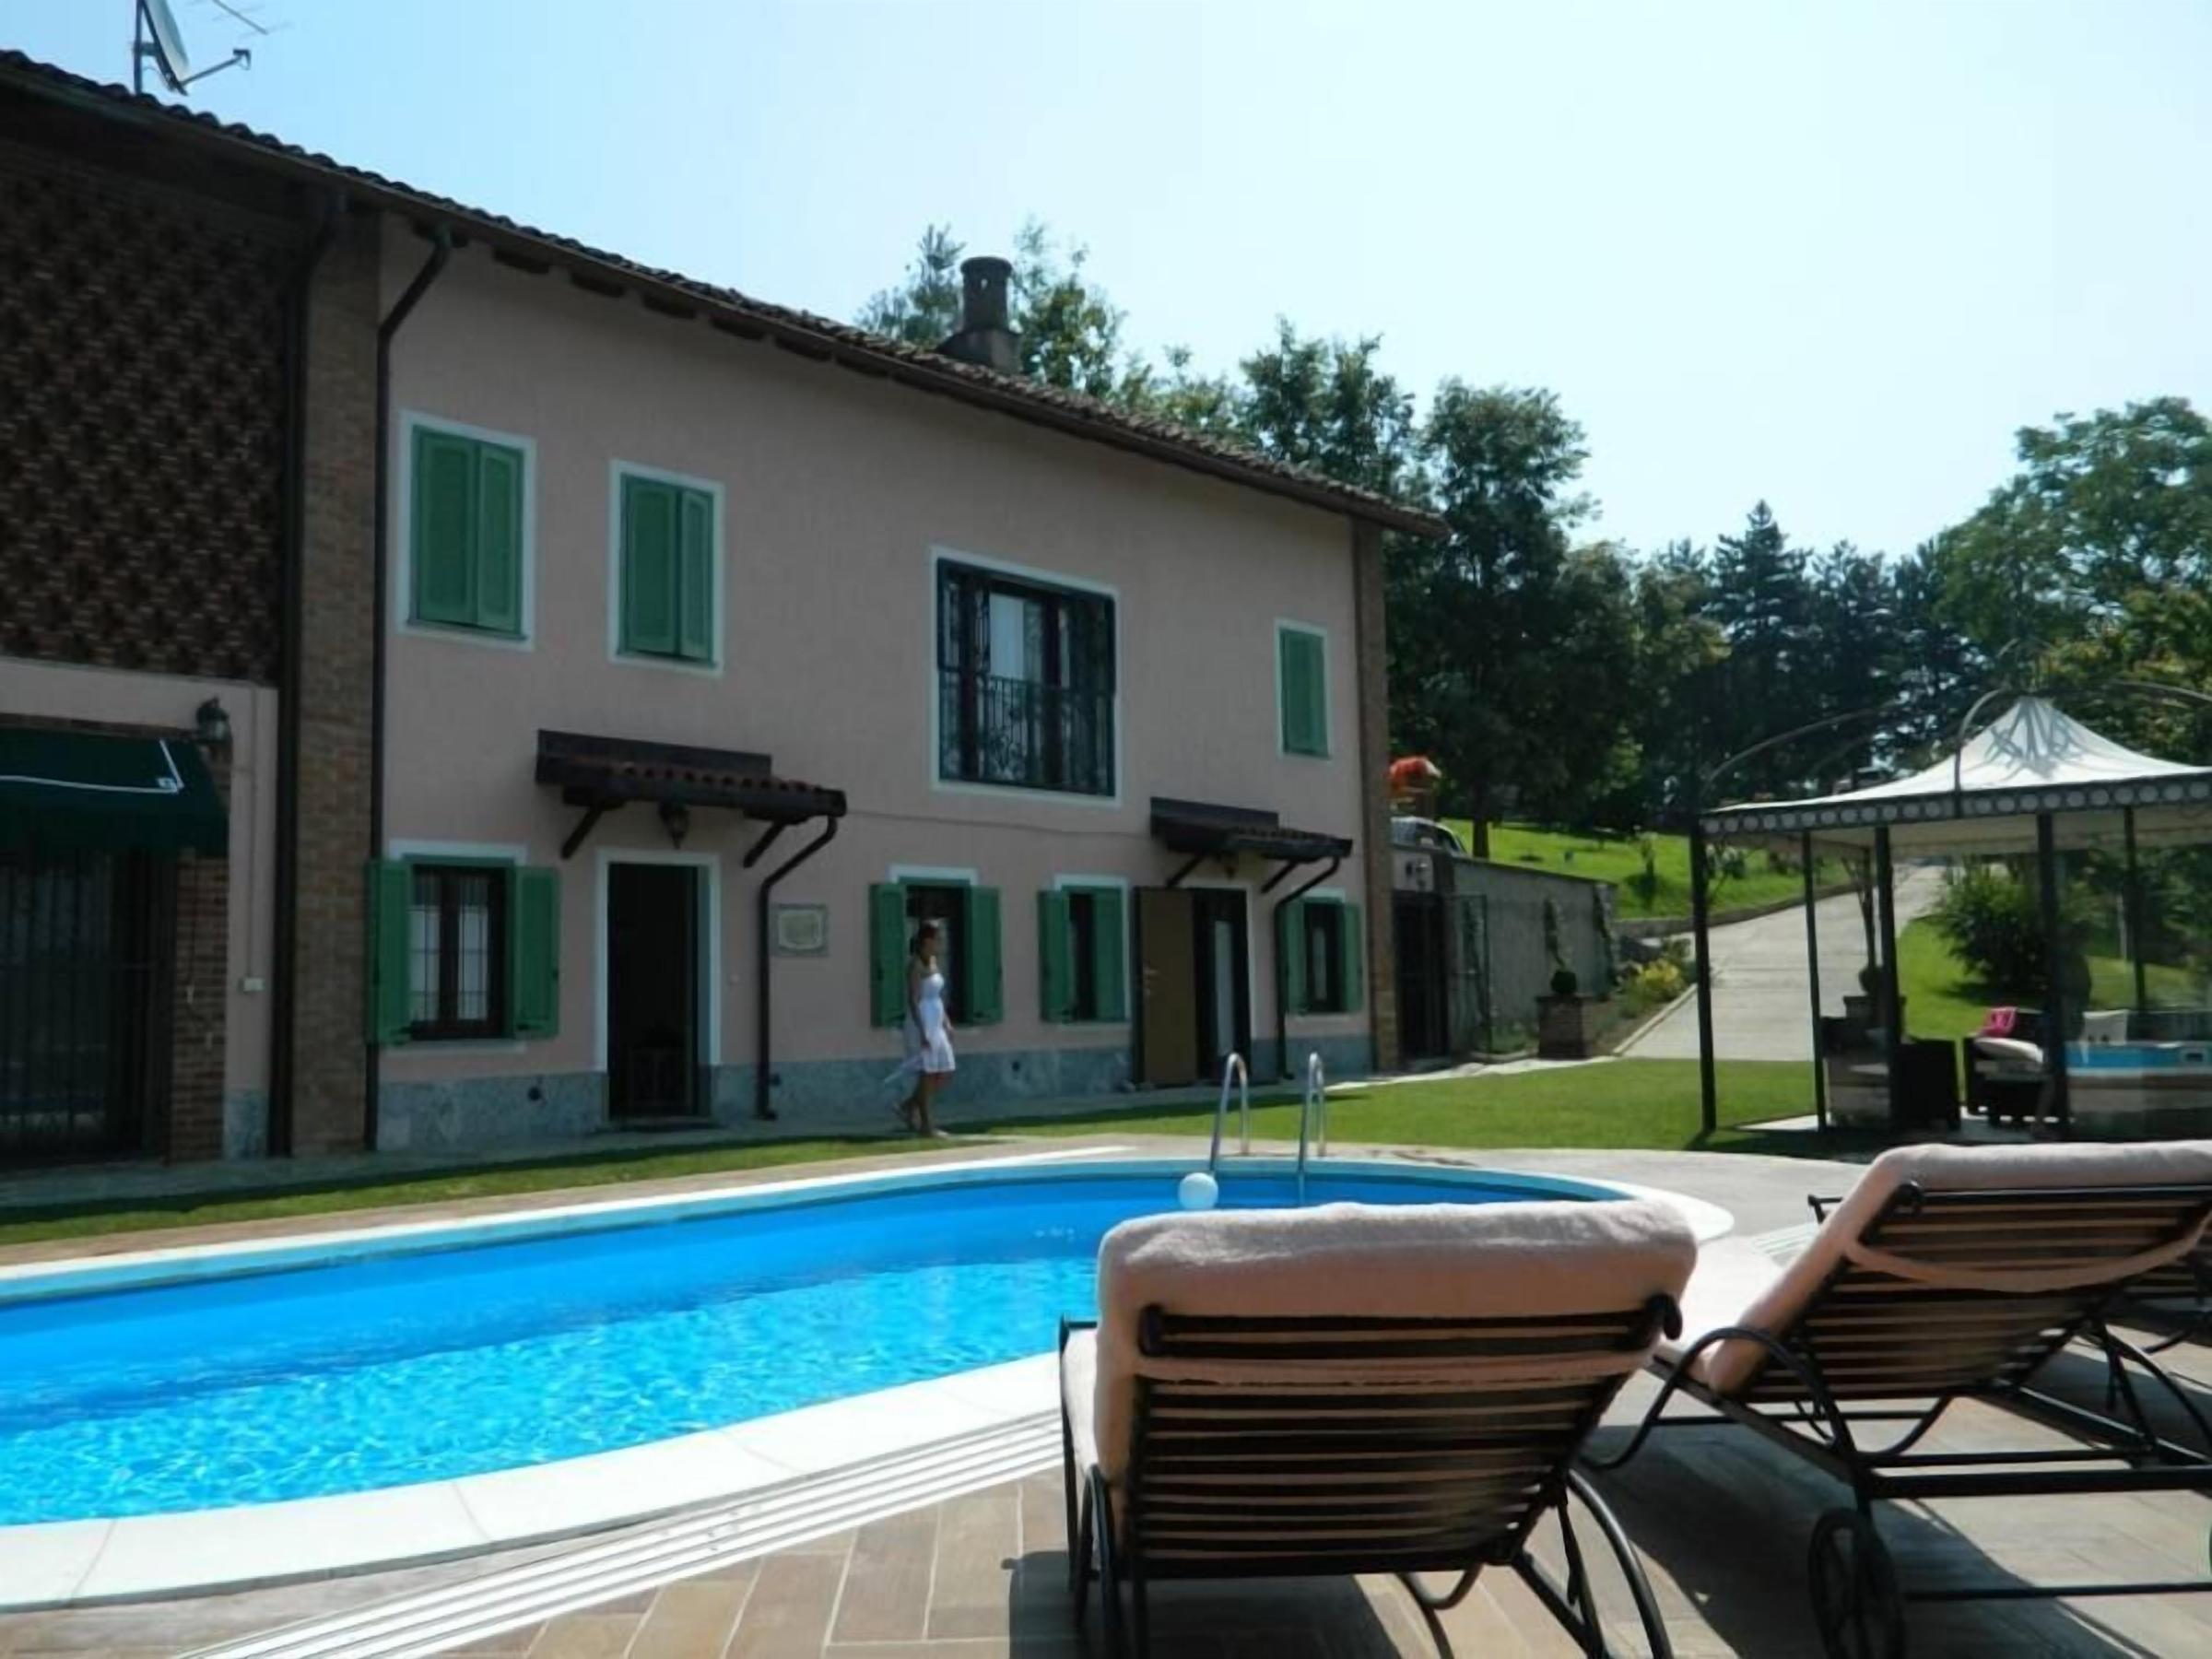 Pet Friendly Beautiful House Nestled in the Heart of Monferrato